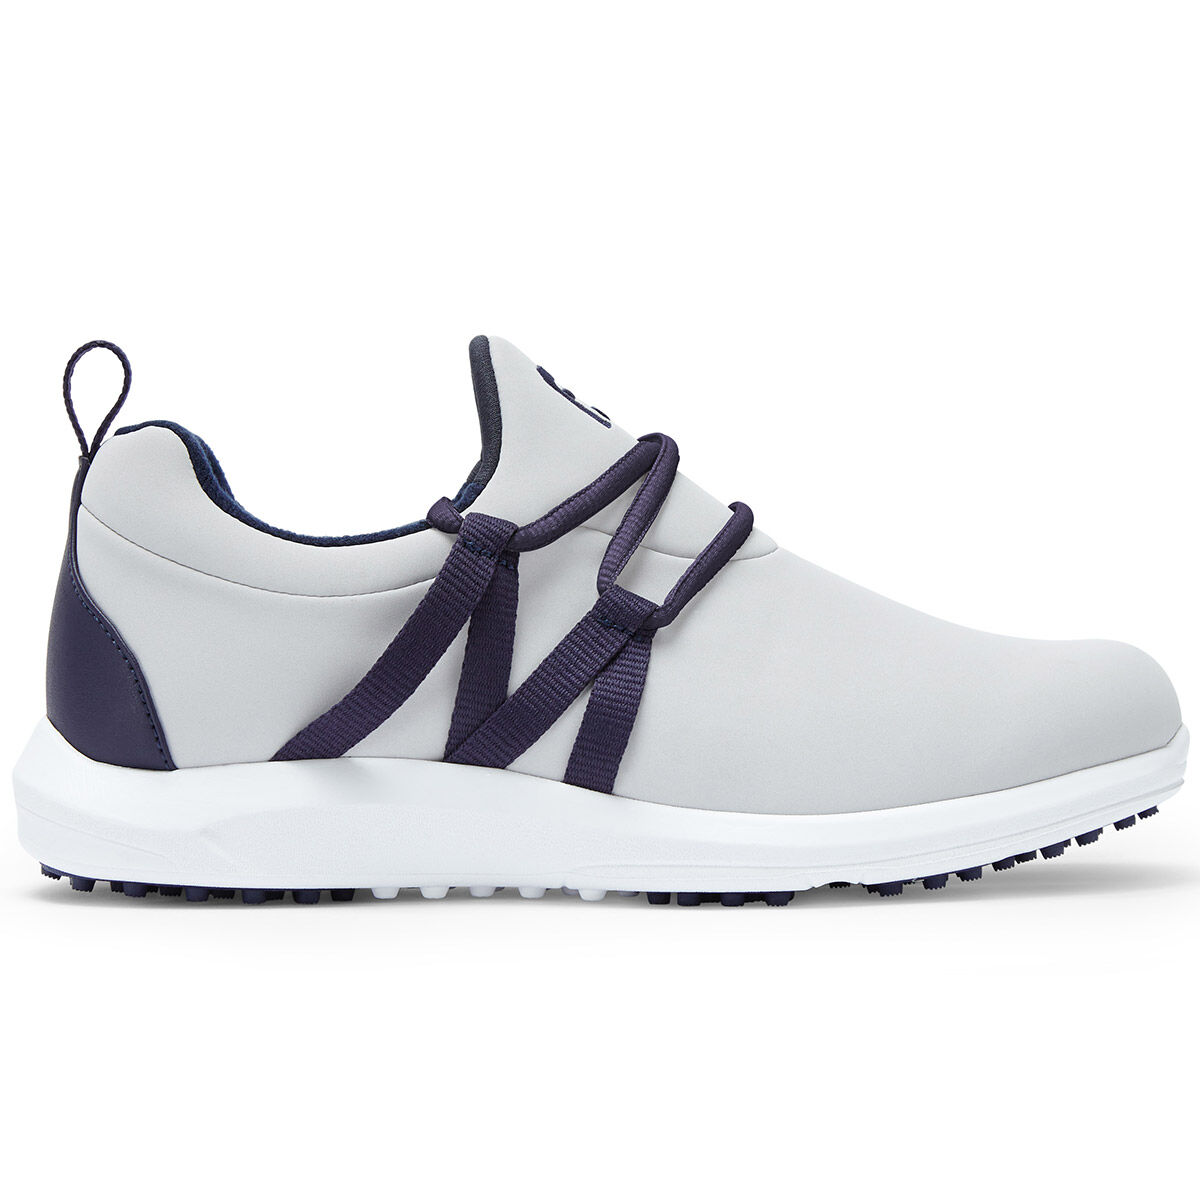 Chaussures FootJoy Leisure Slip-On pour femmes, femme, 4, Light grey/navy, Large | Online Golf